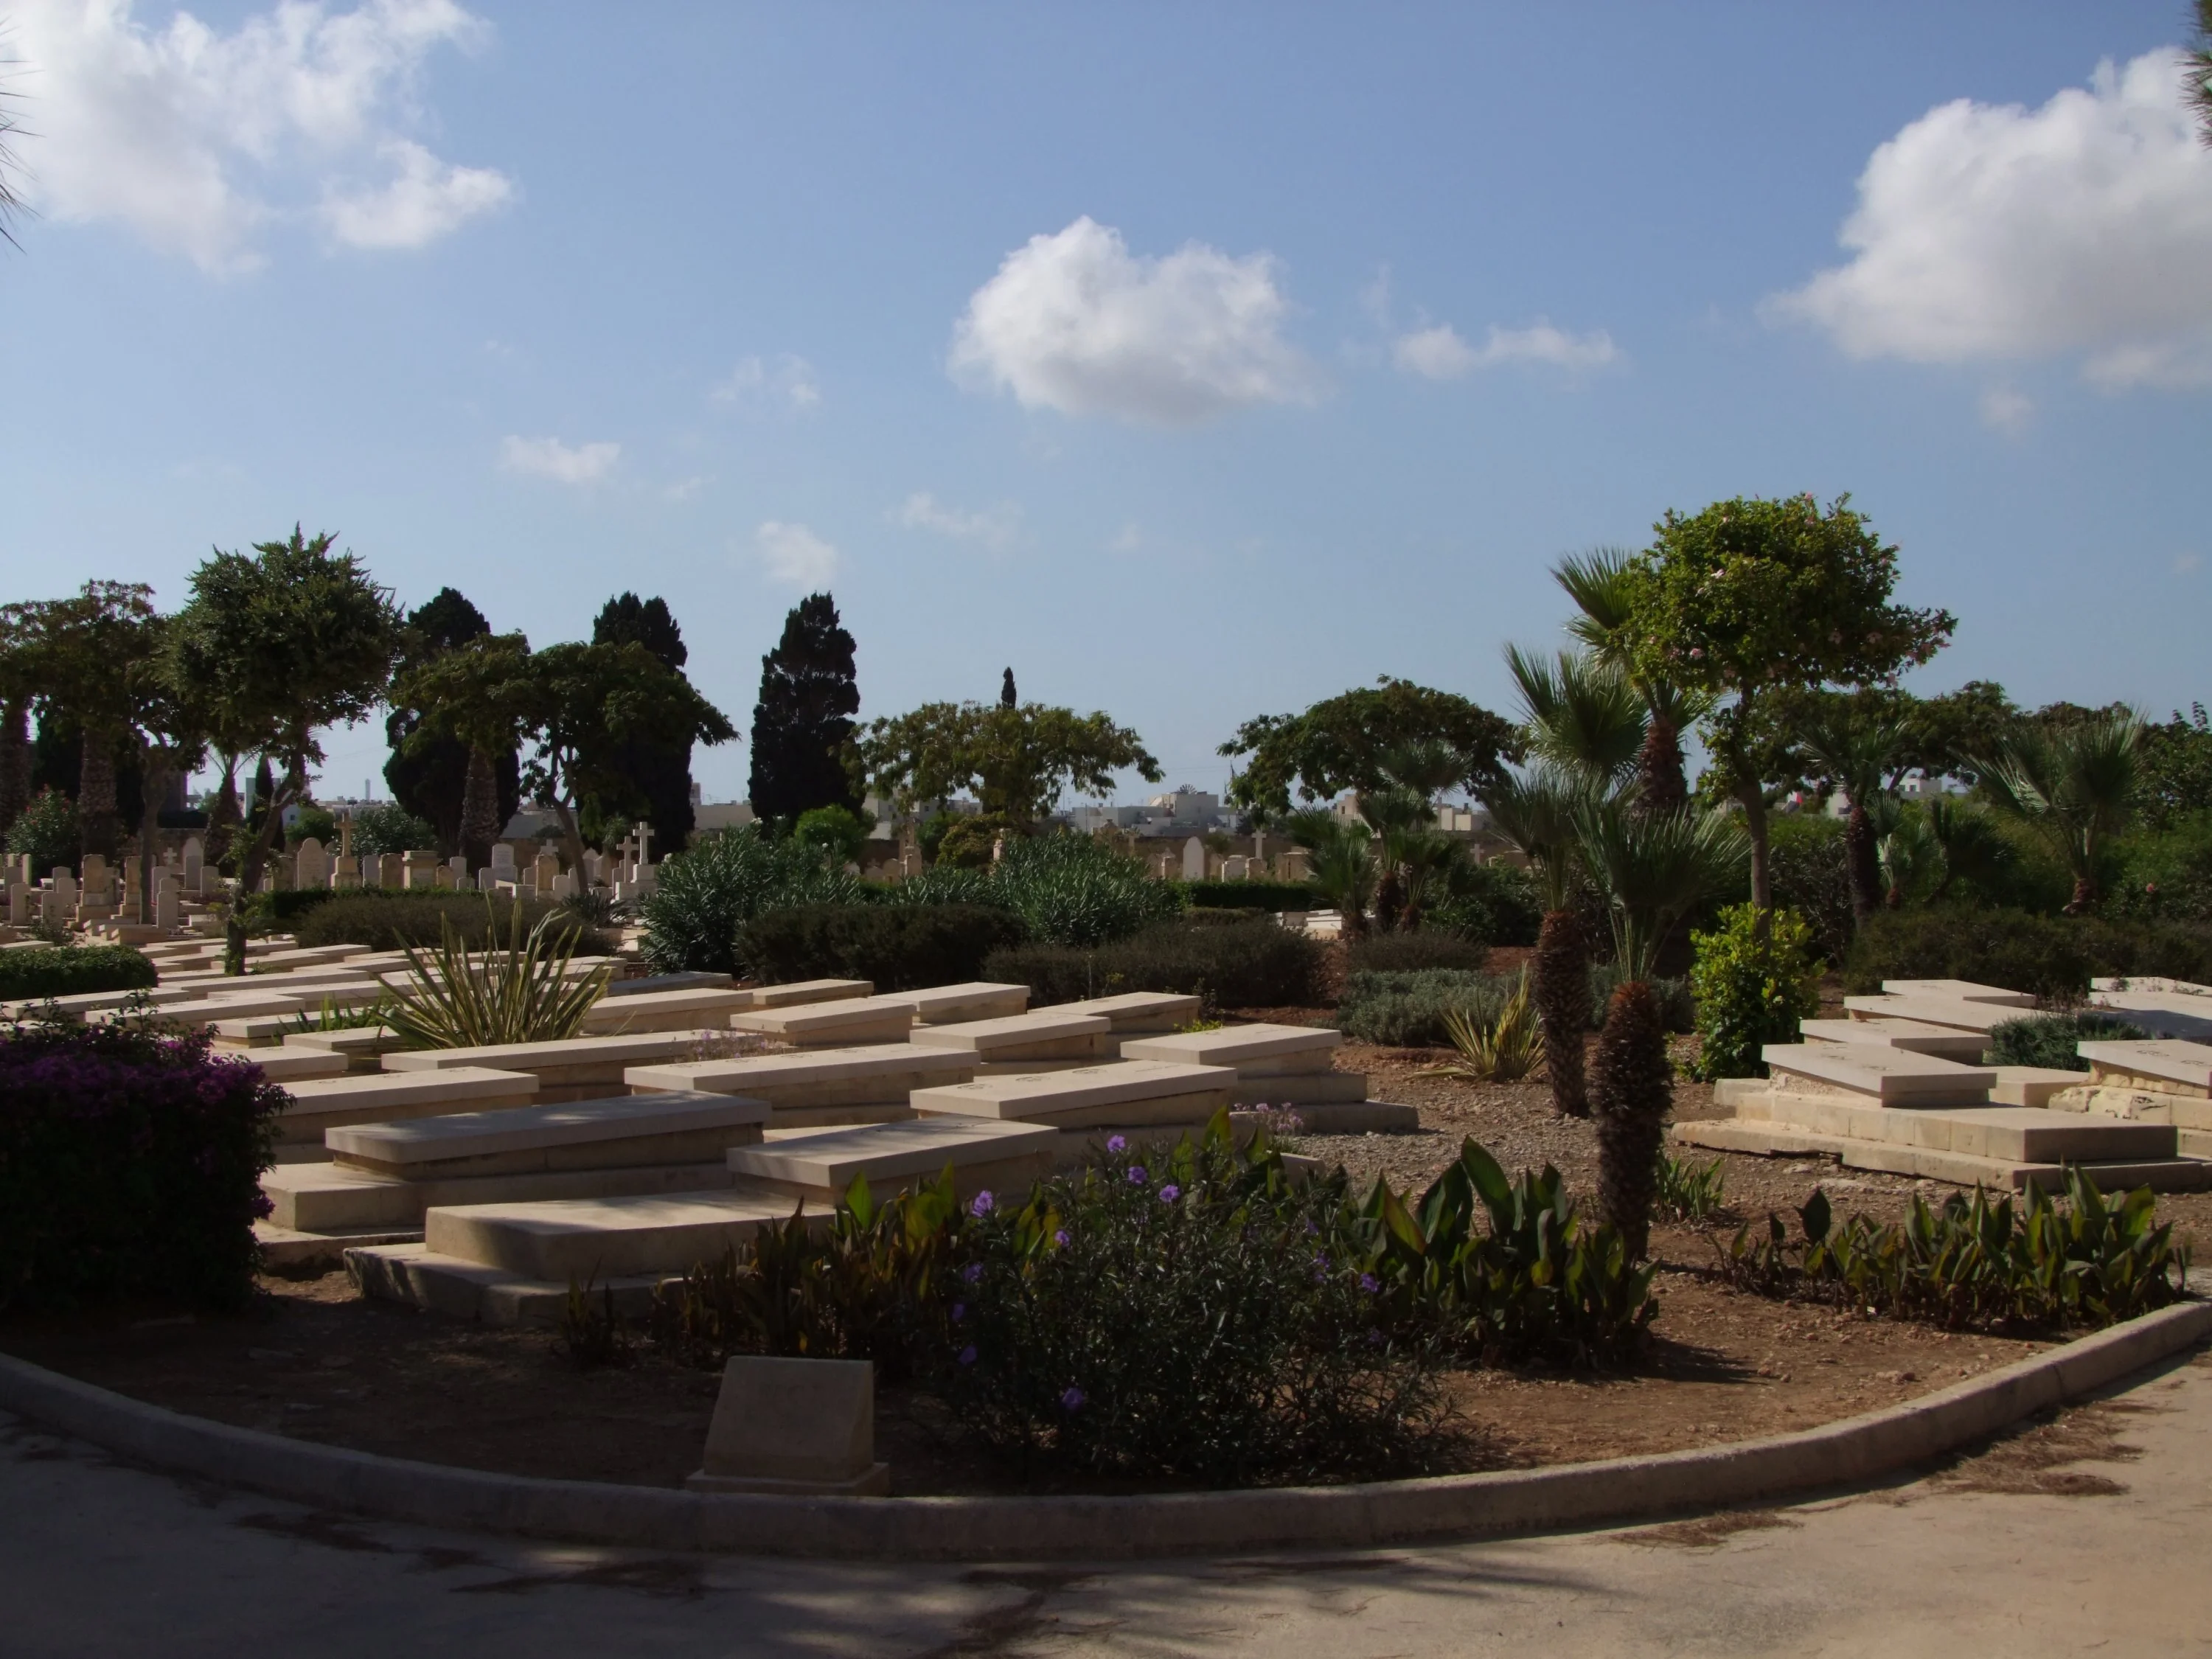 View Of Kalkara Naval Cemetery, Malta